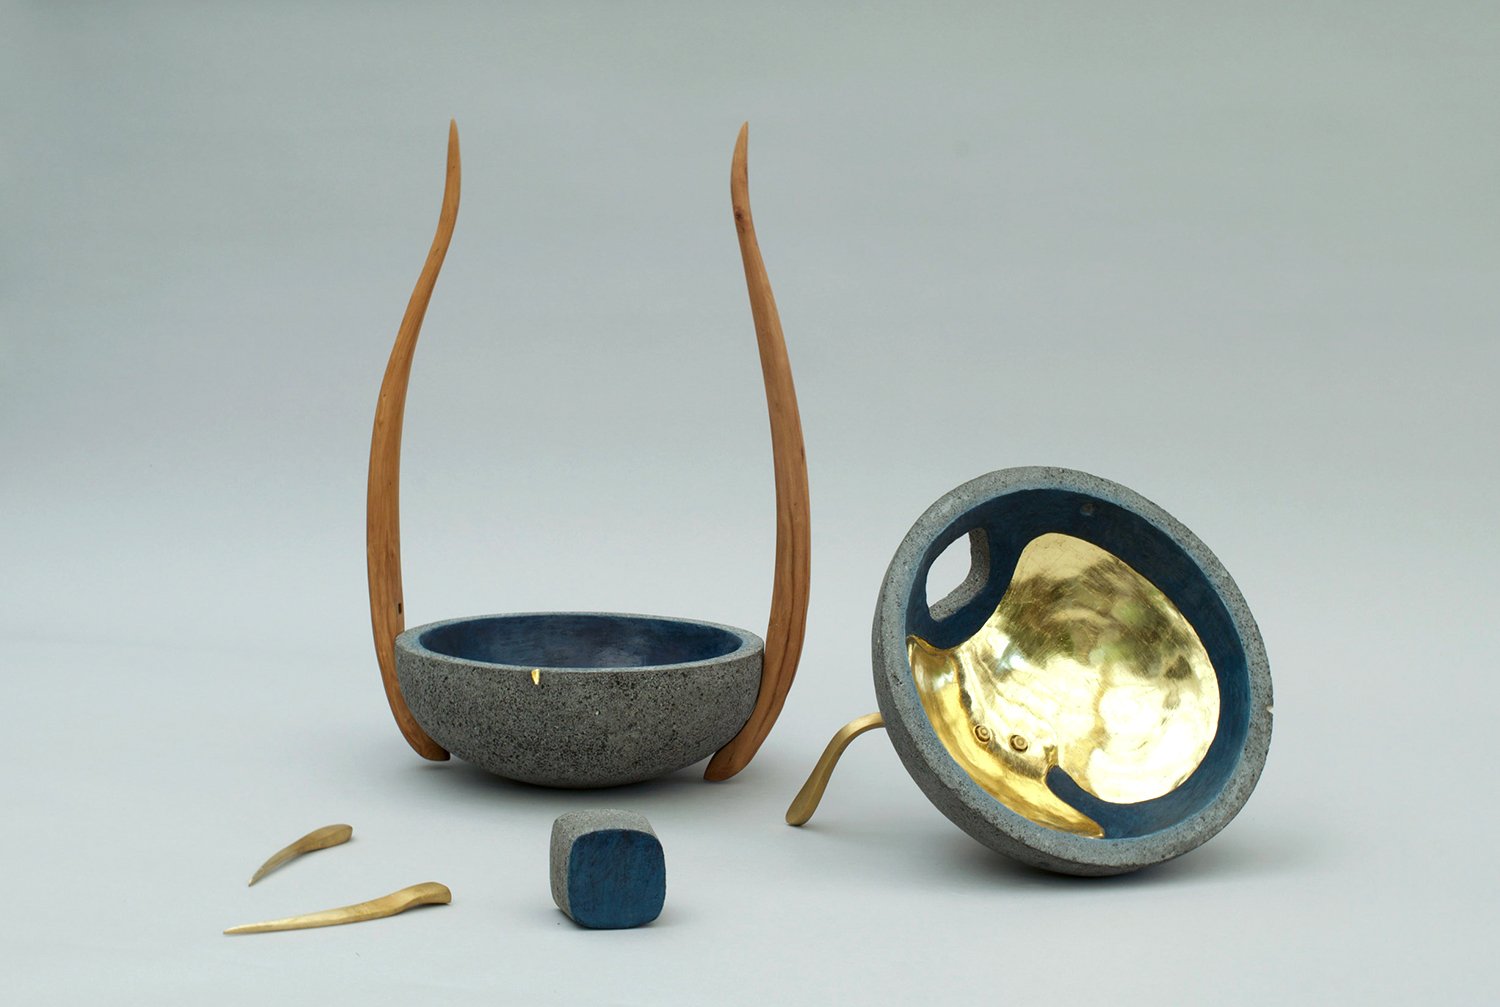 urna-vessel-box-sculpture-julio-martinez-barnetche-marion-friedmann-gallery-high-res12122022-DSC_0053-lr.jpg